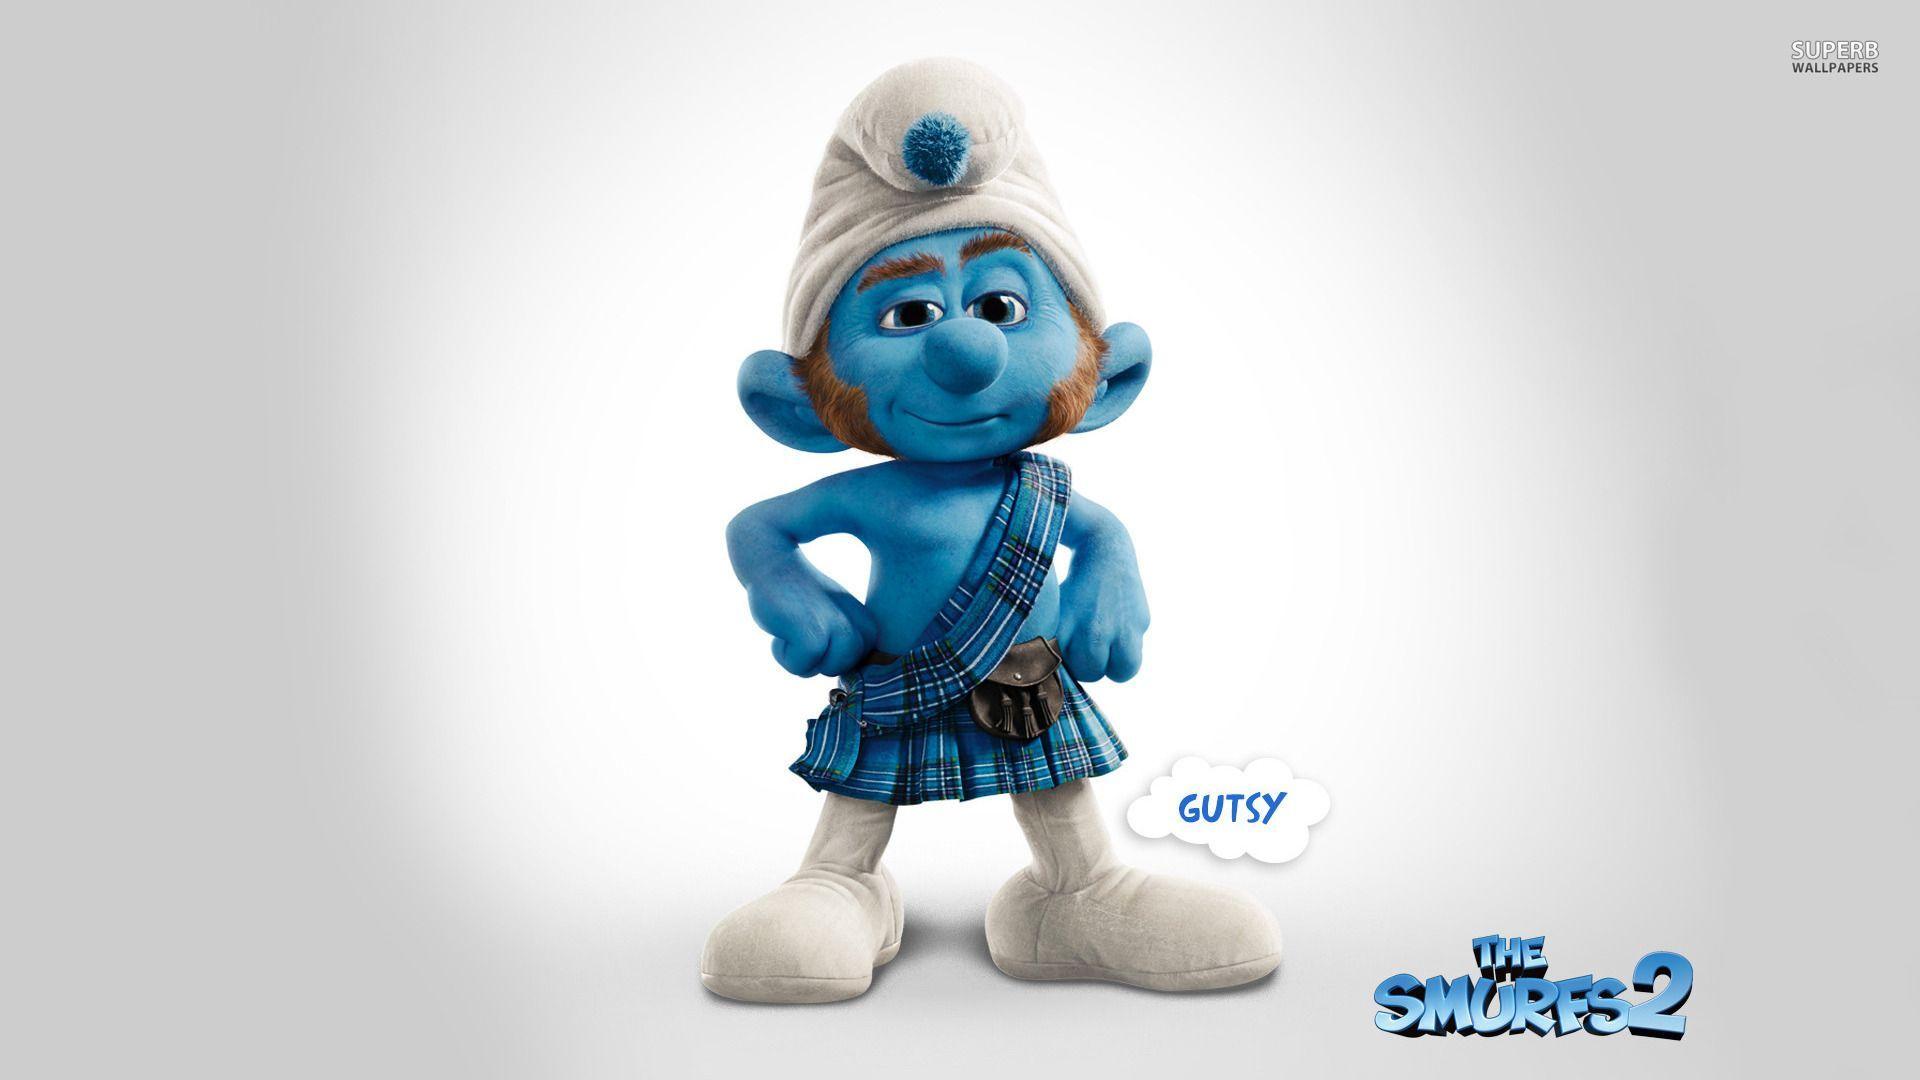 Gutsy The Smurfs 2 21798 1920x